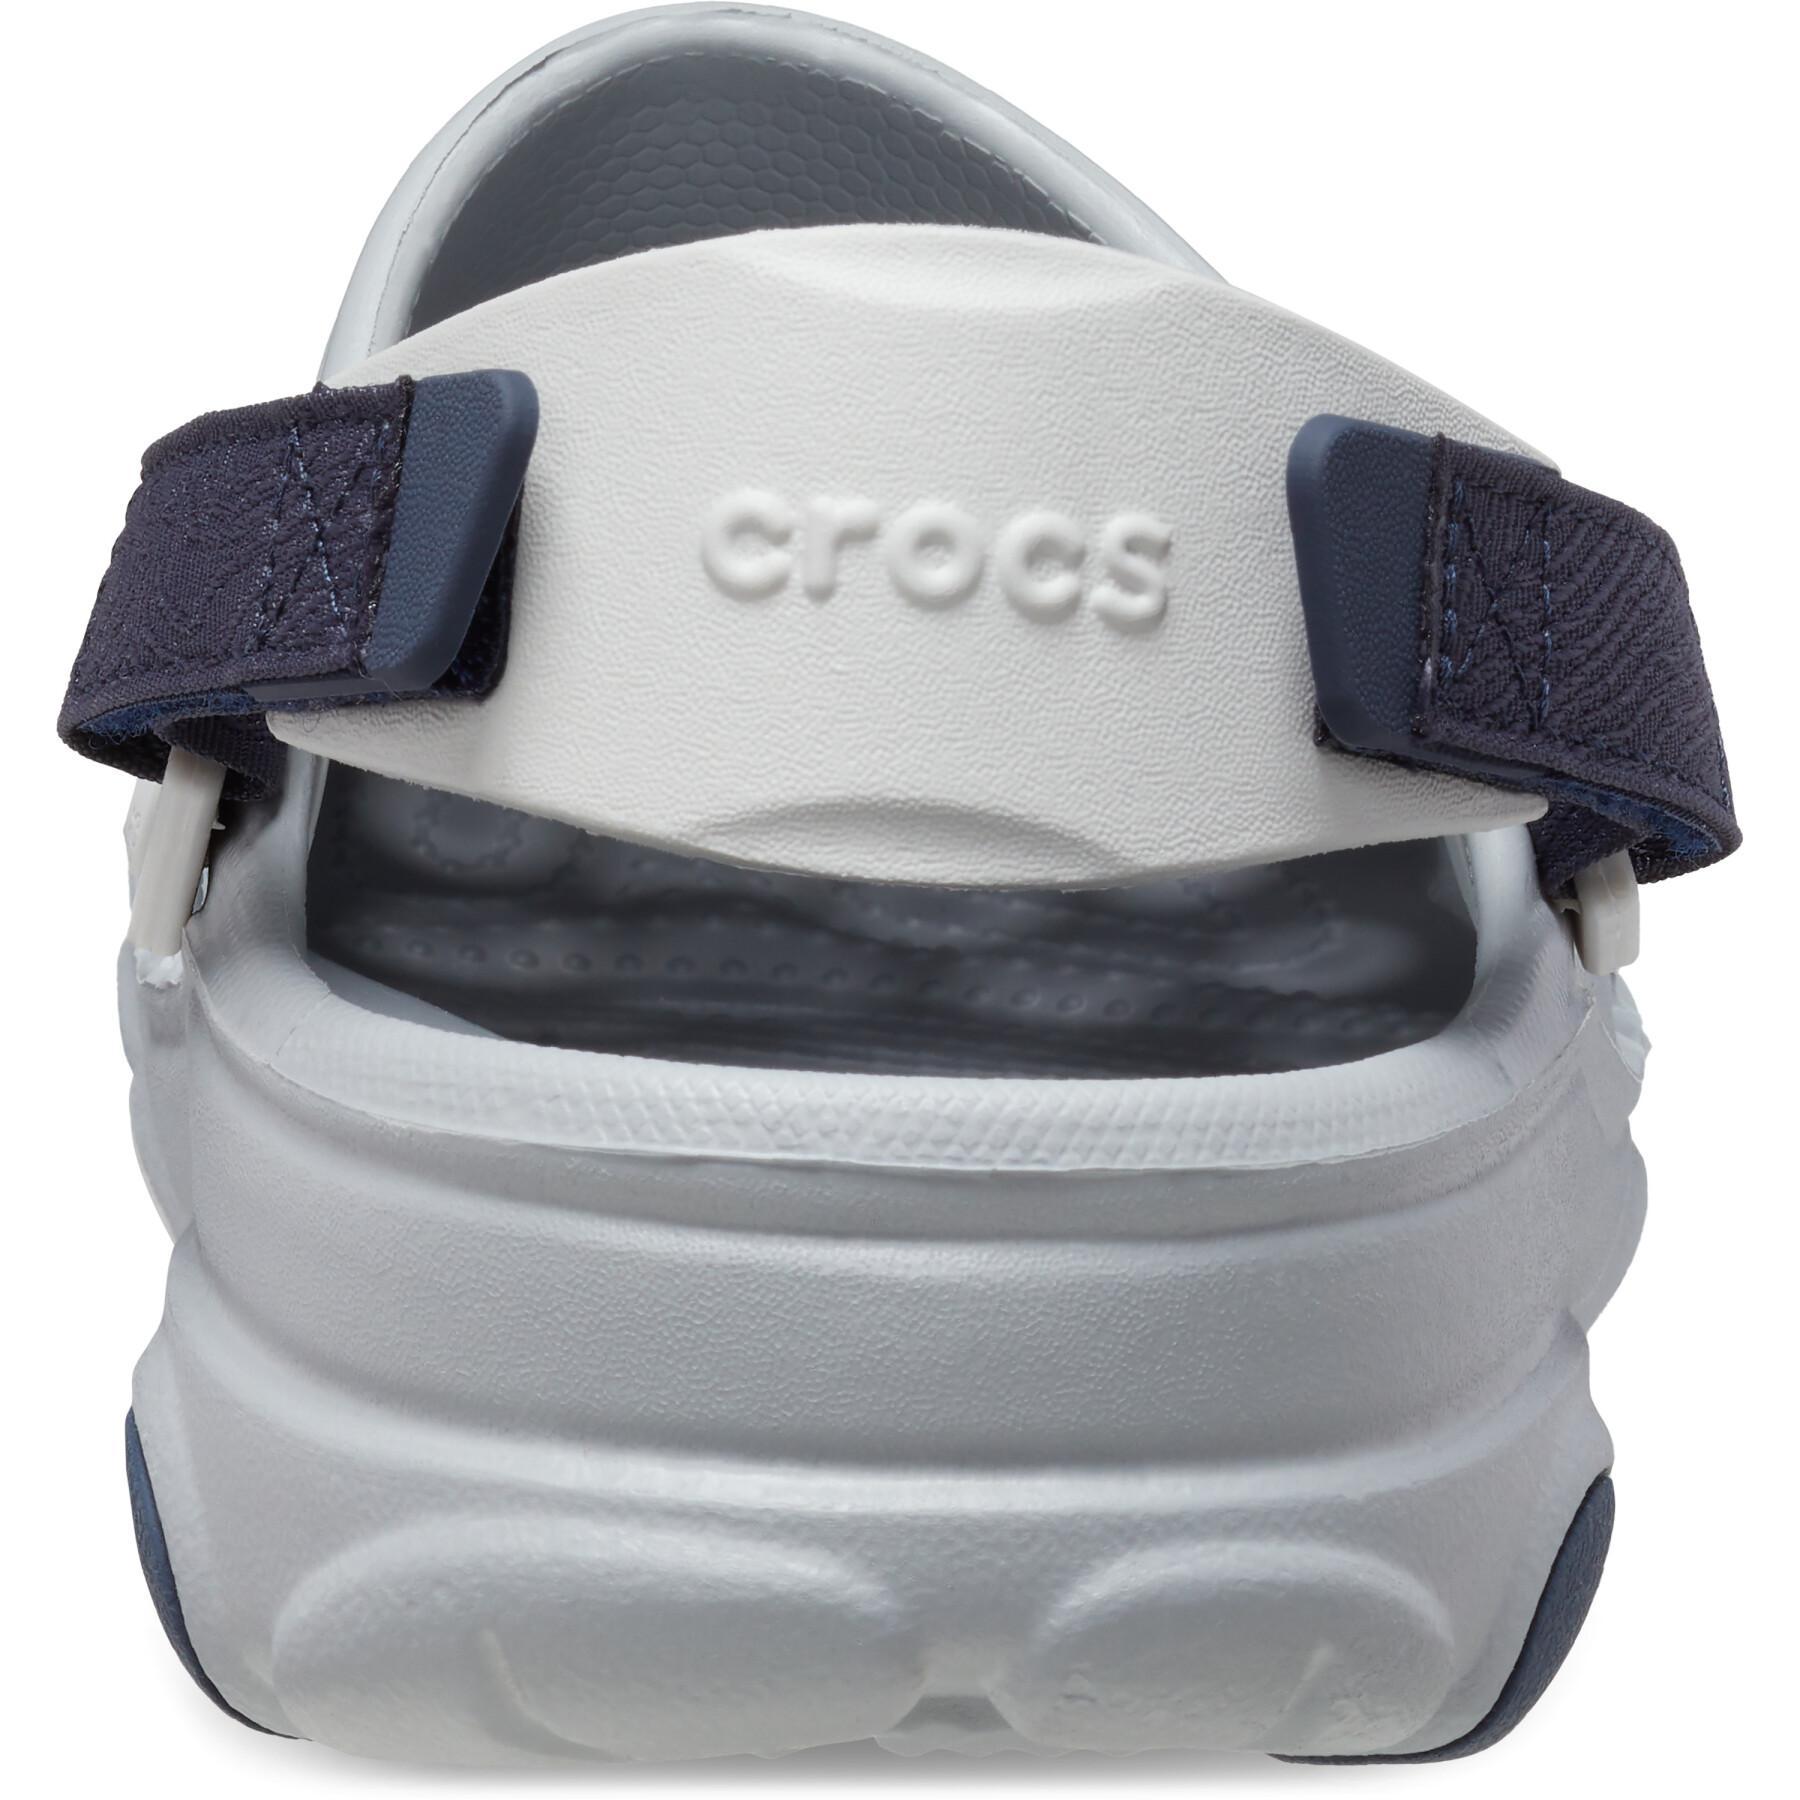 Chodaki Crocs Classic All Terrain